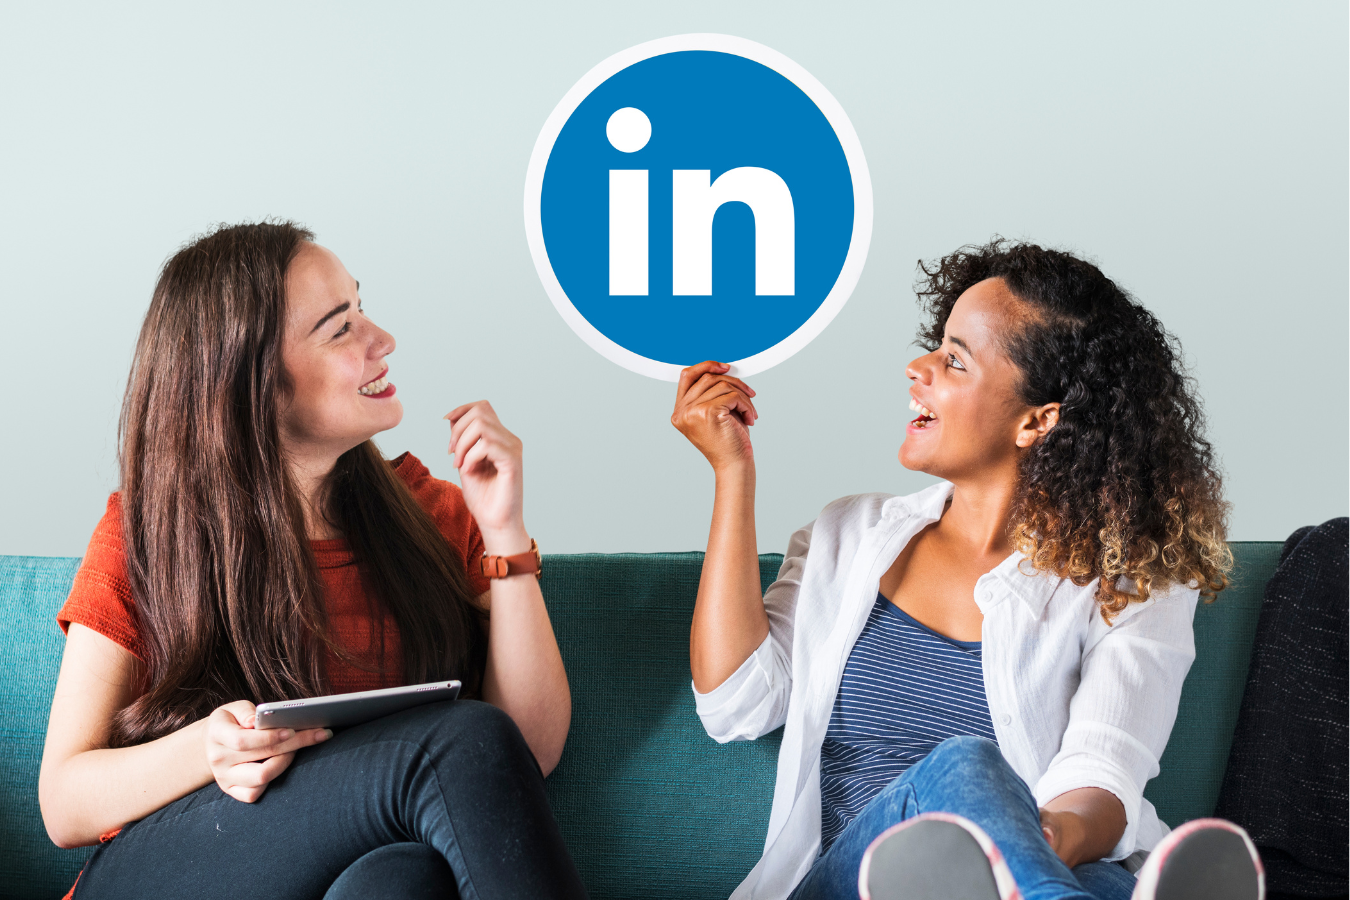 Two women holding a LinkedIn logo